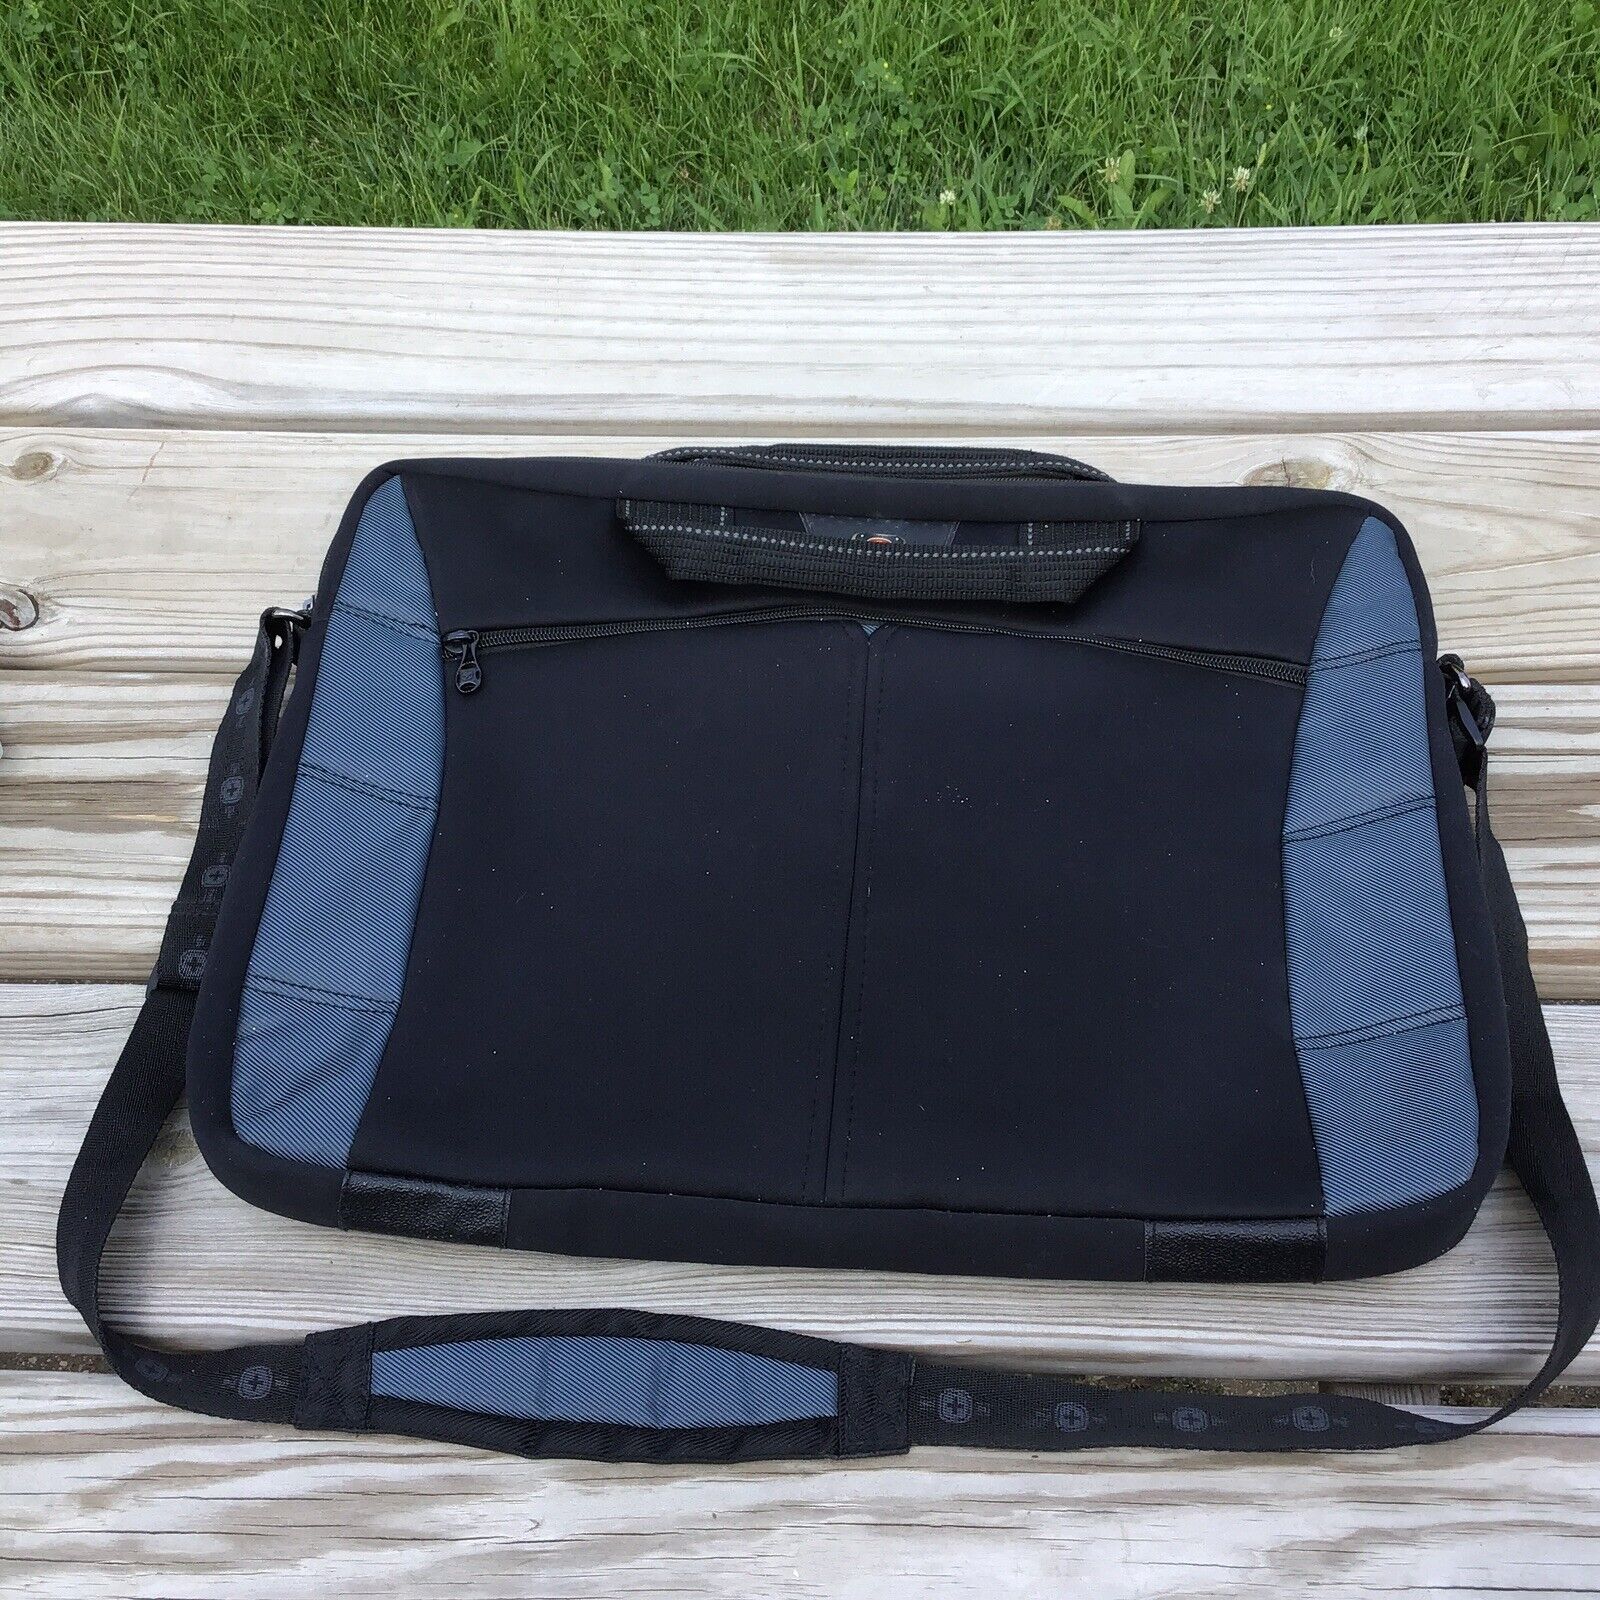 Swiss Gear Laptop Carrying Bag For 17.3 Laptops Blue Black With Shoulder Strap